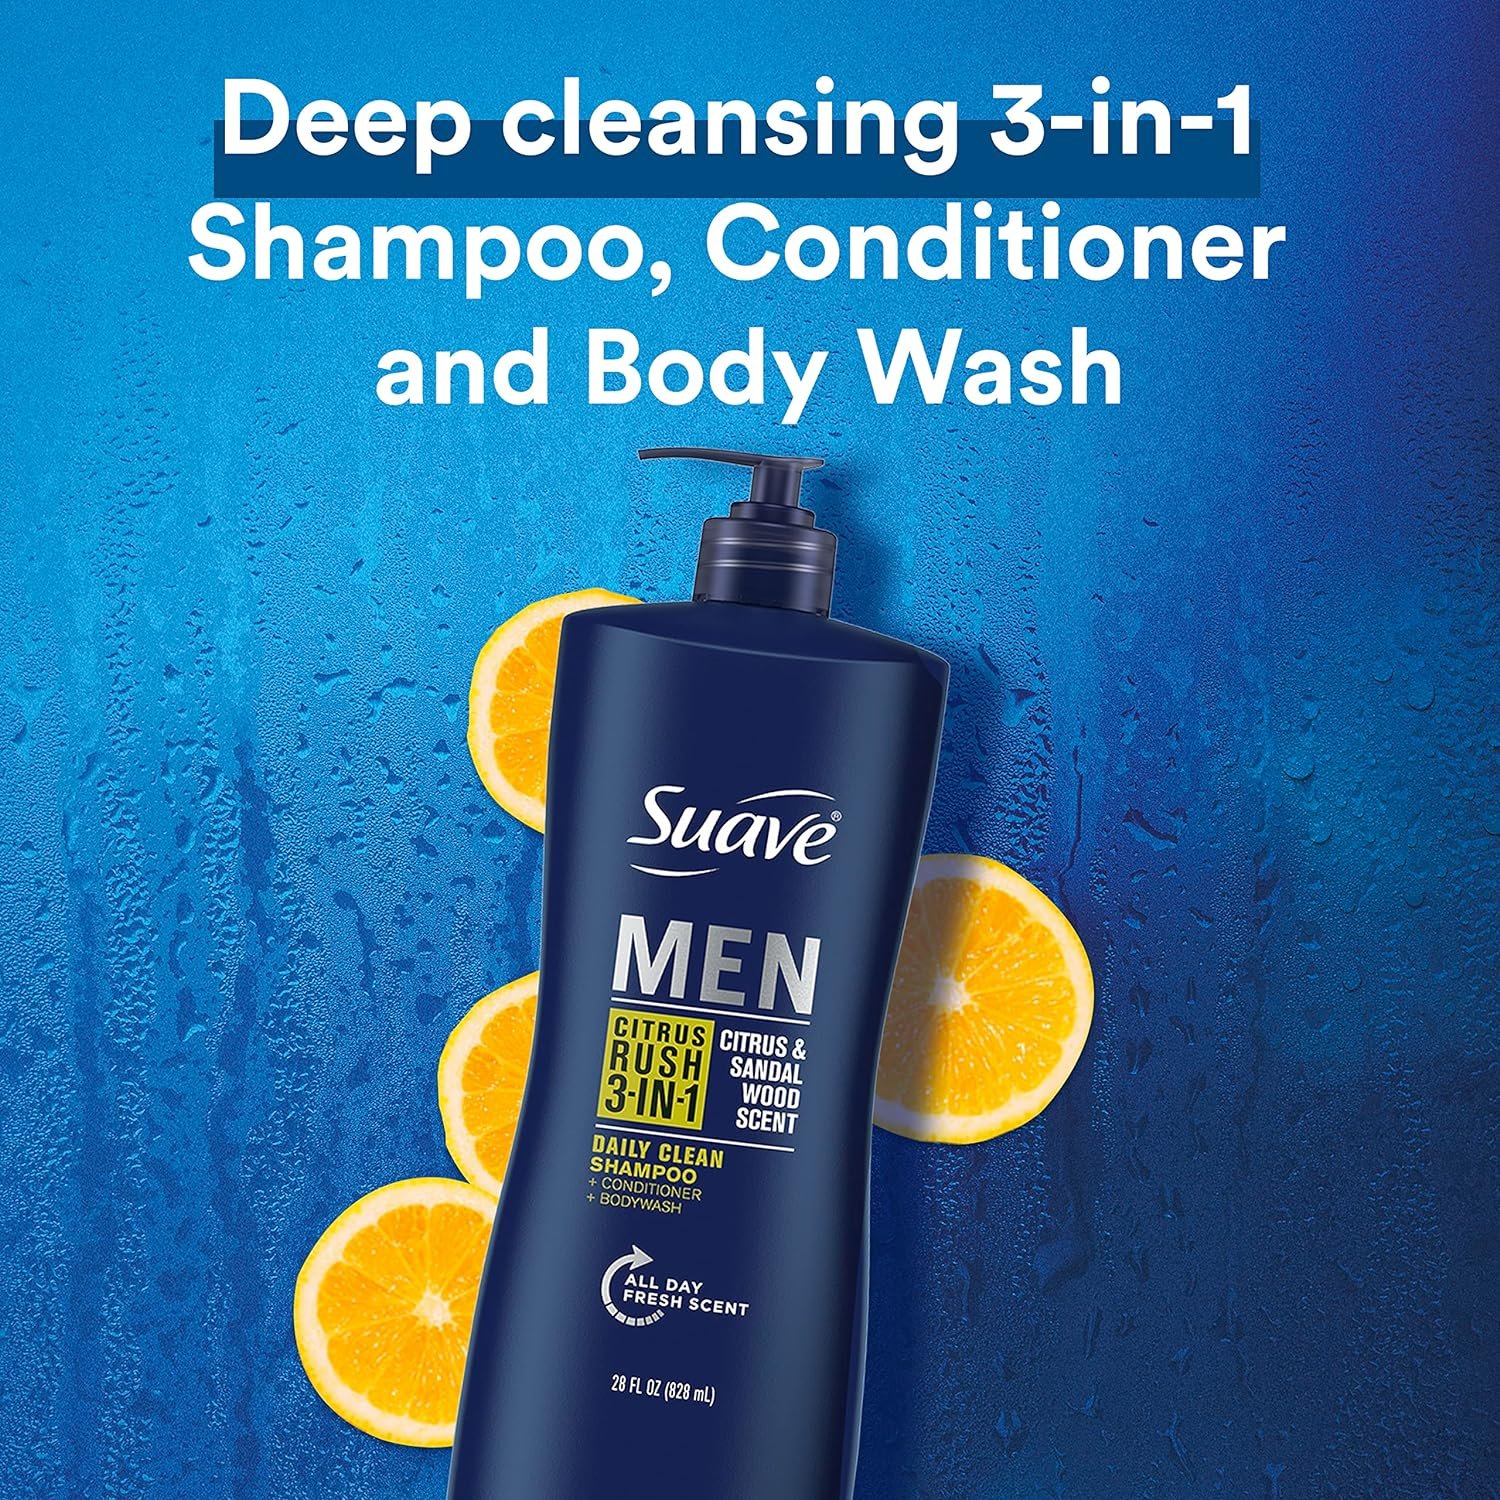 Suave Men Citrus Rush 3-in-1 Shampoo, Conditioner & Body Wash, Daily Clean, Citrus & Sandalwood, 28 fl oz - image 4 of 11